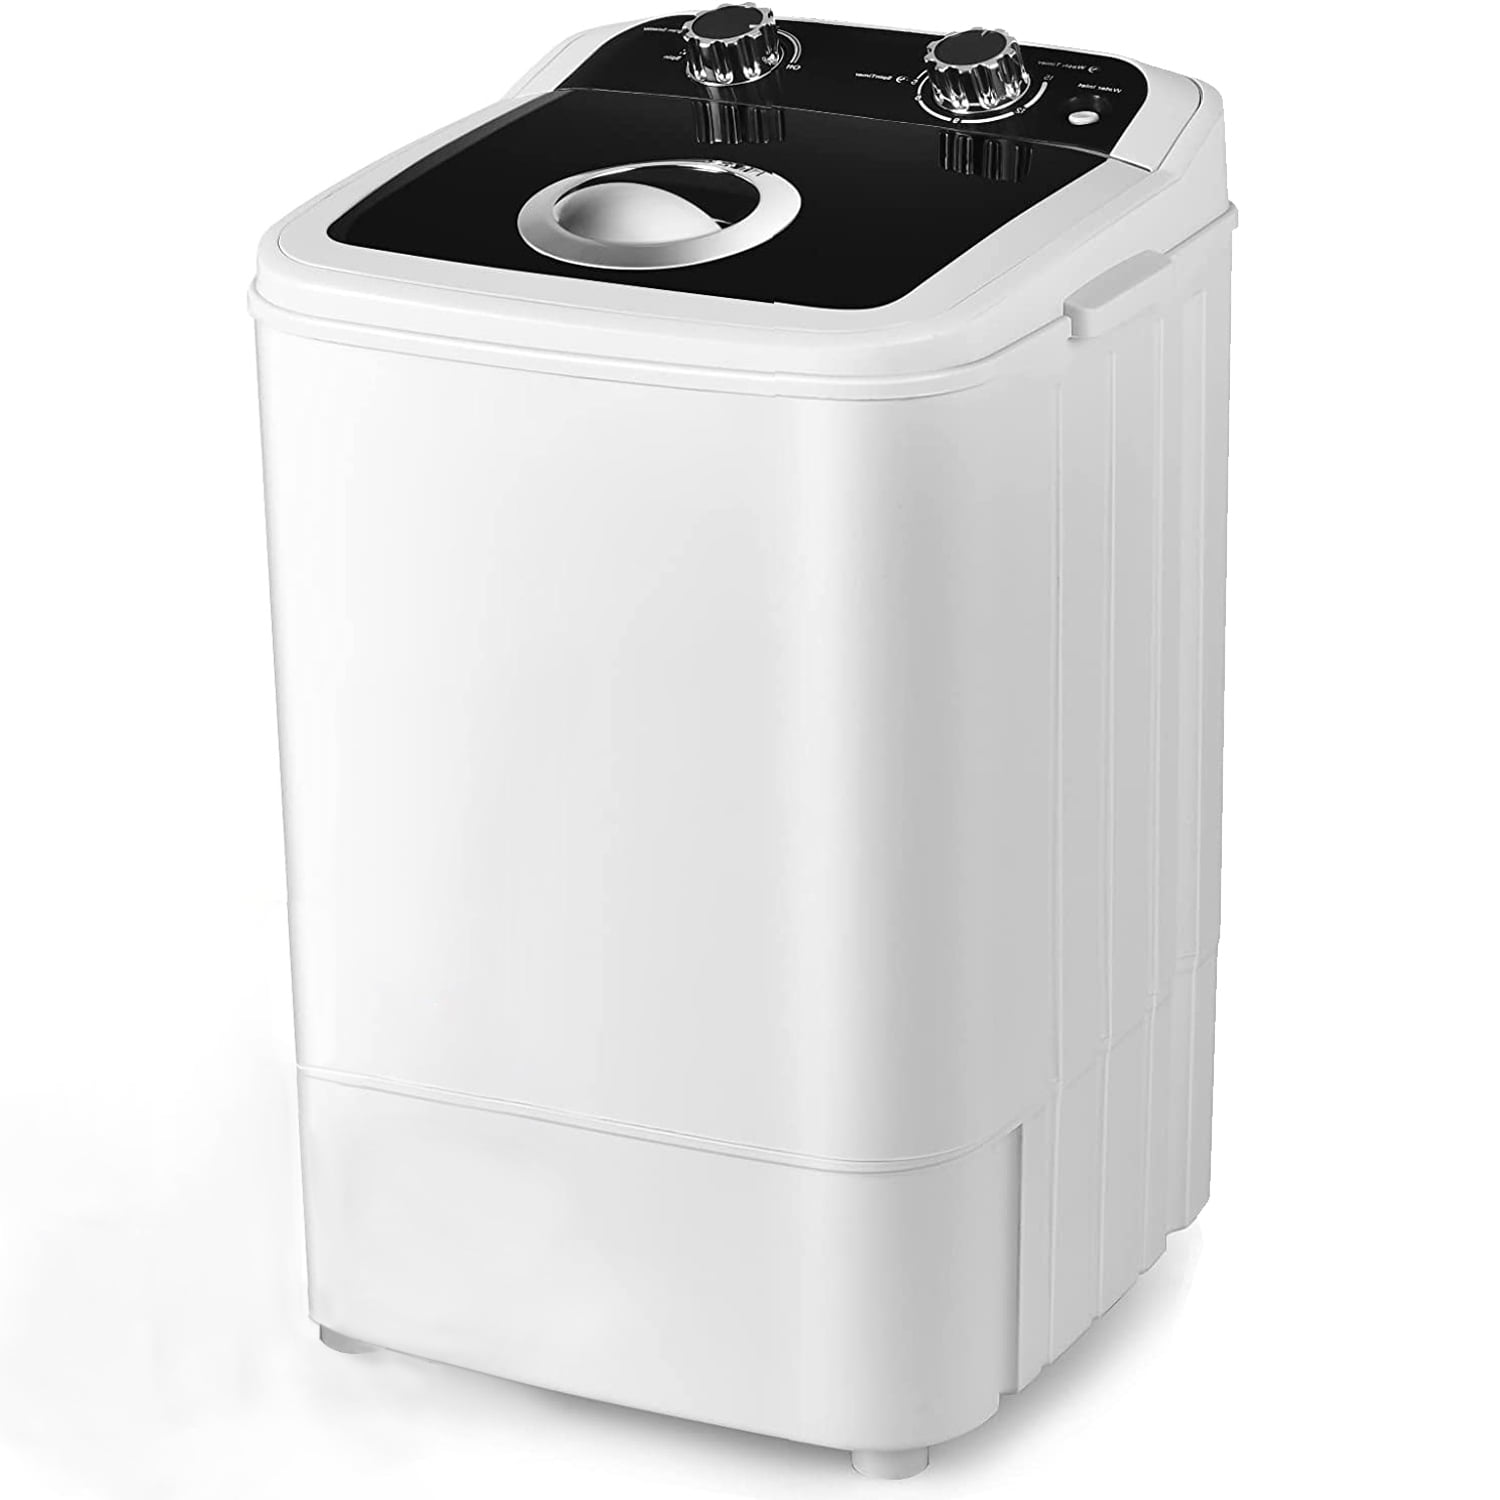  IKASEFU Mini Washer Portable Washing Machine for Socks  Underpant, Ultrasonic Turbo Washing Machine for Dorm Home Travel Business  Camping, USB Powered, 30 Minute Timer : Appliances